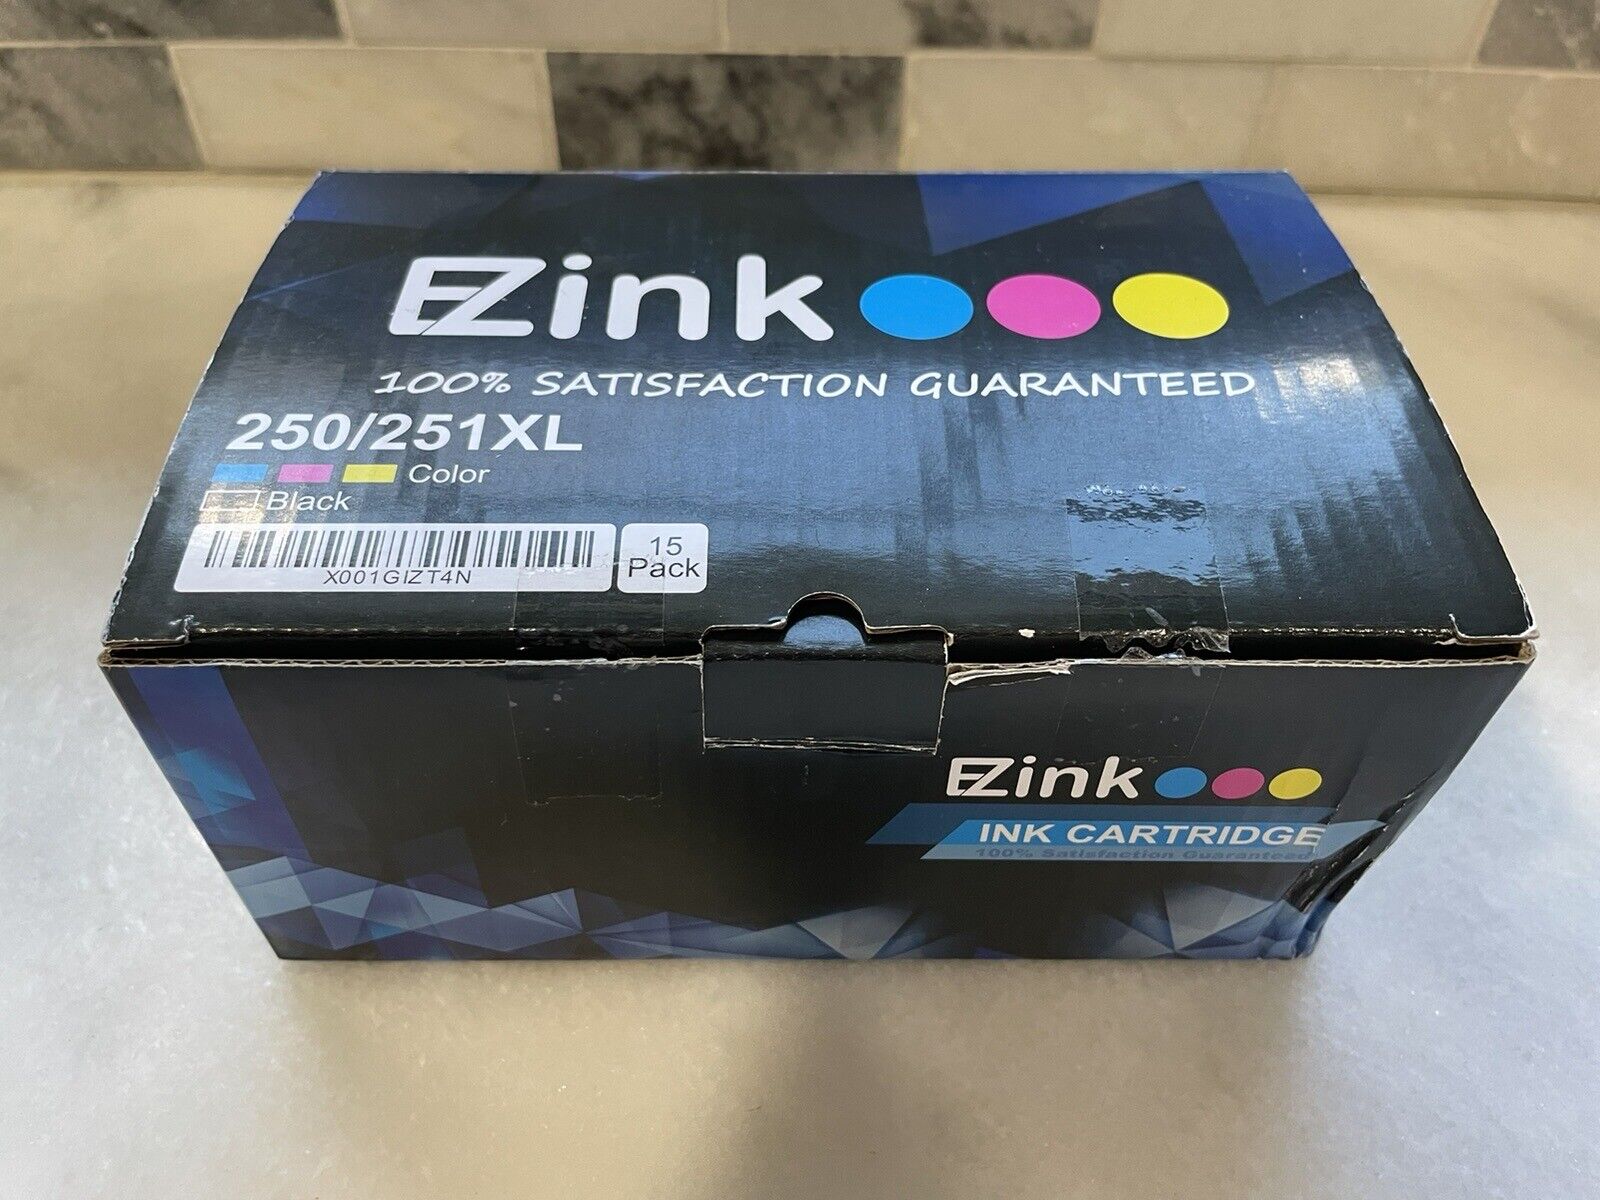 EZ Ink 250/251 XL Compatible Ink Cartridges 15 Pack New Open Box